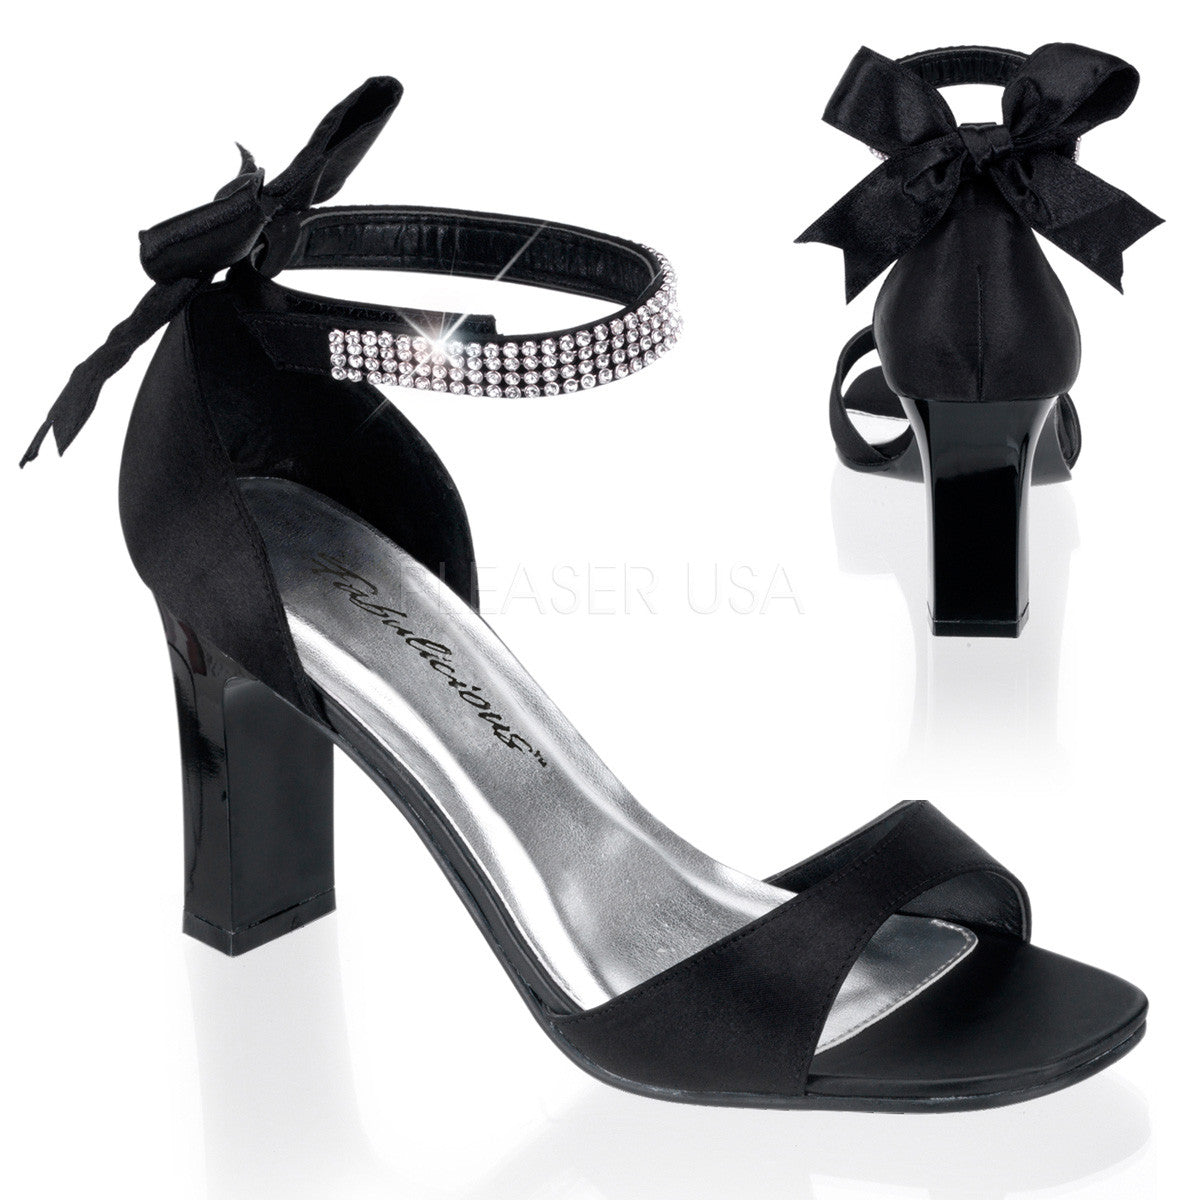 FABULICIOUS ROMANCE-372 Black Satin Closed Back Sandals - Shoecup.com